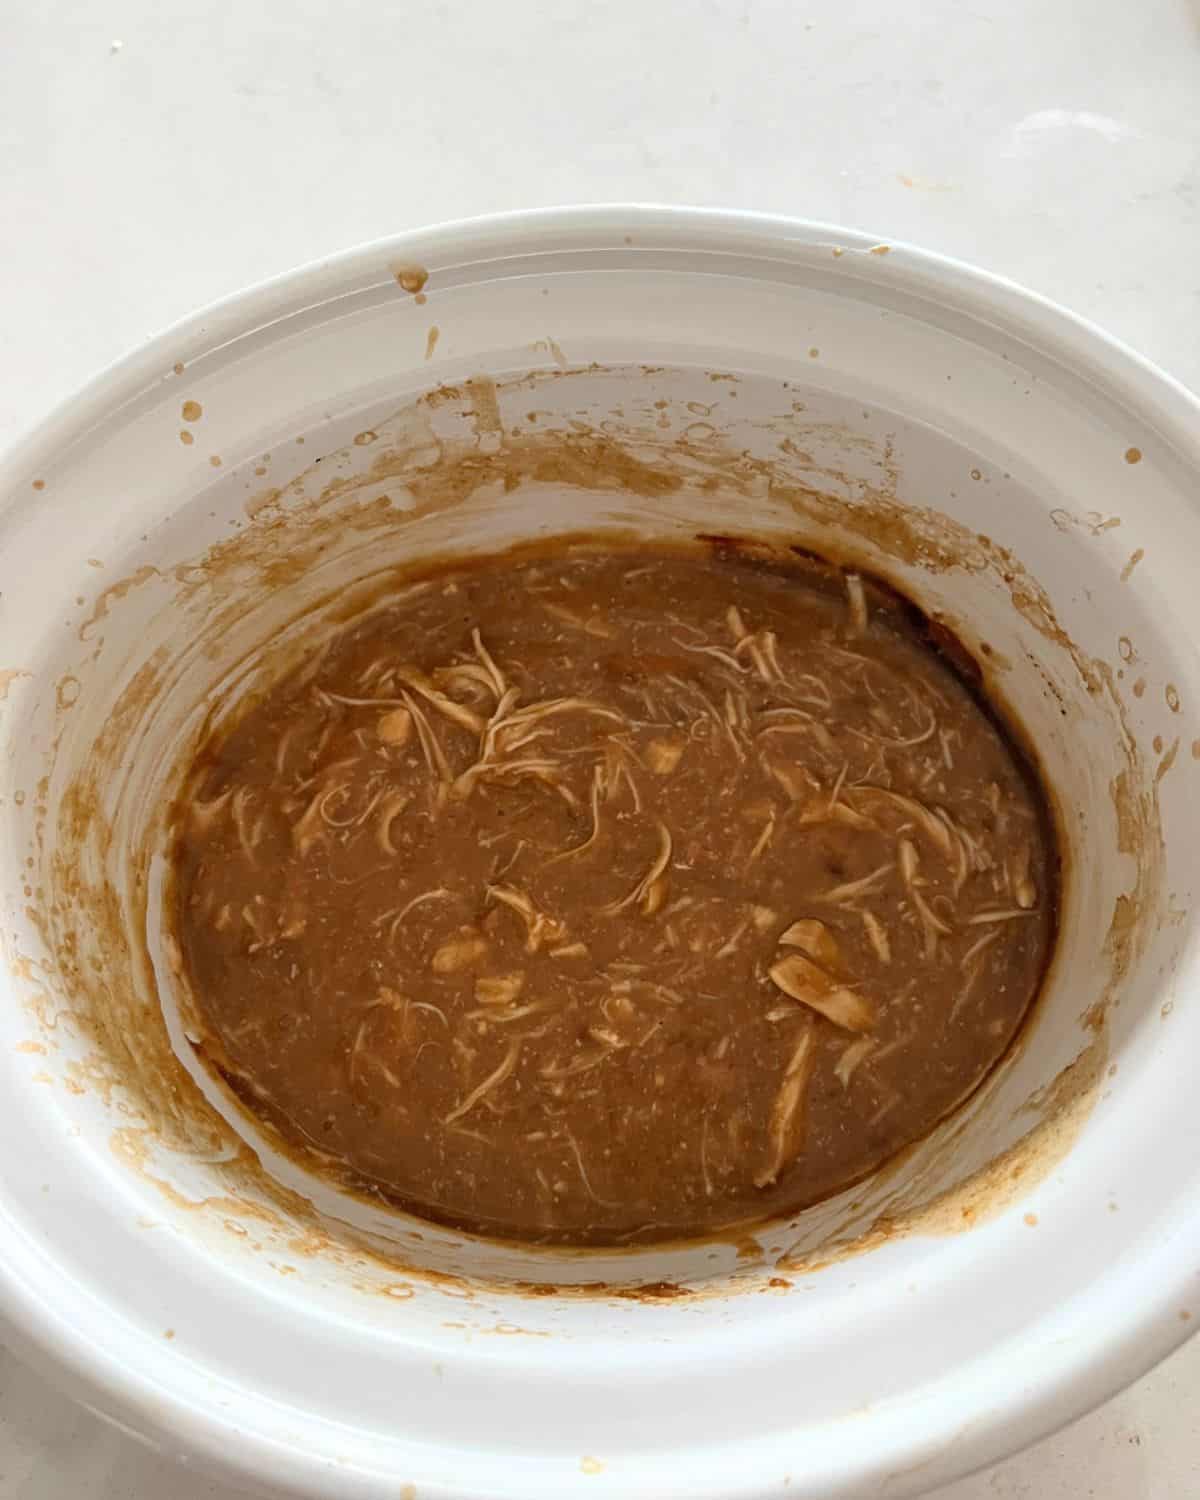 Shredded chicken with gravy in crock pot. 